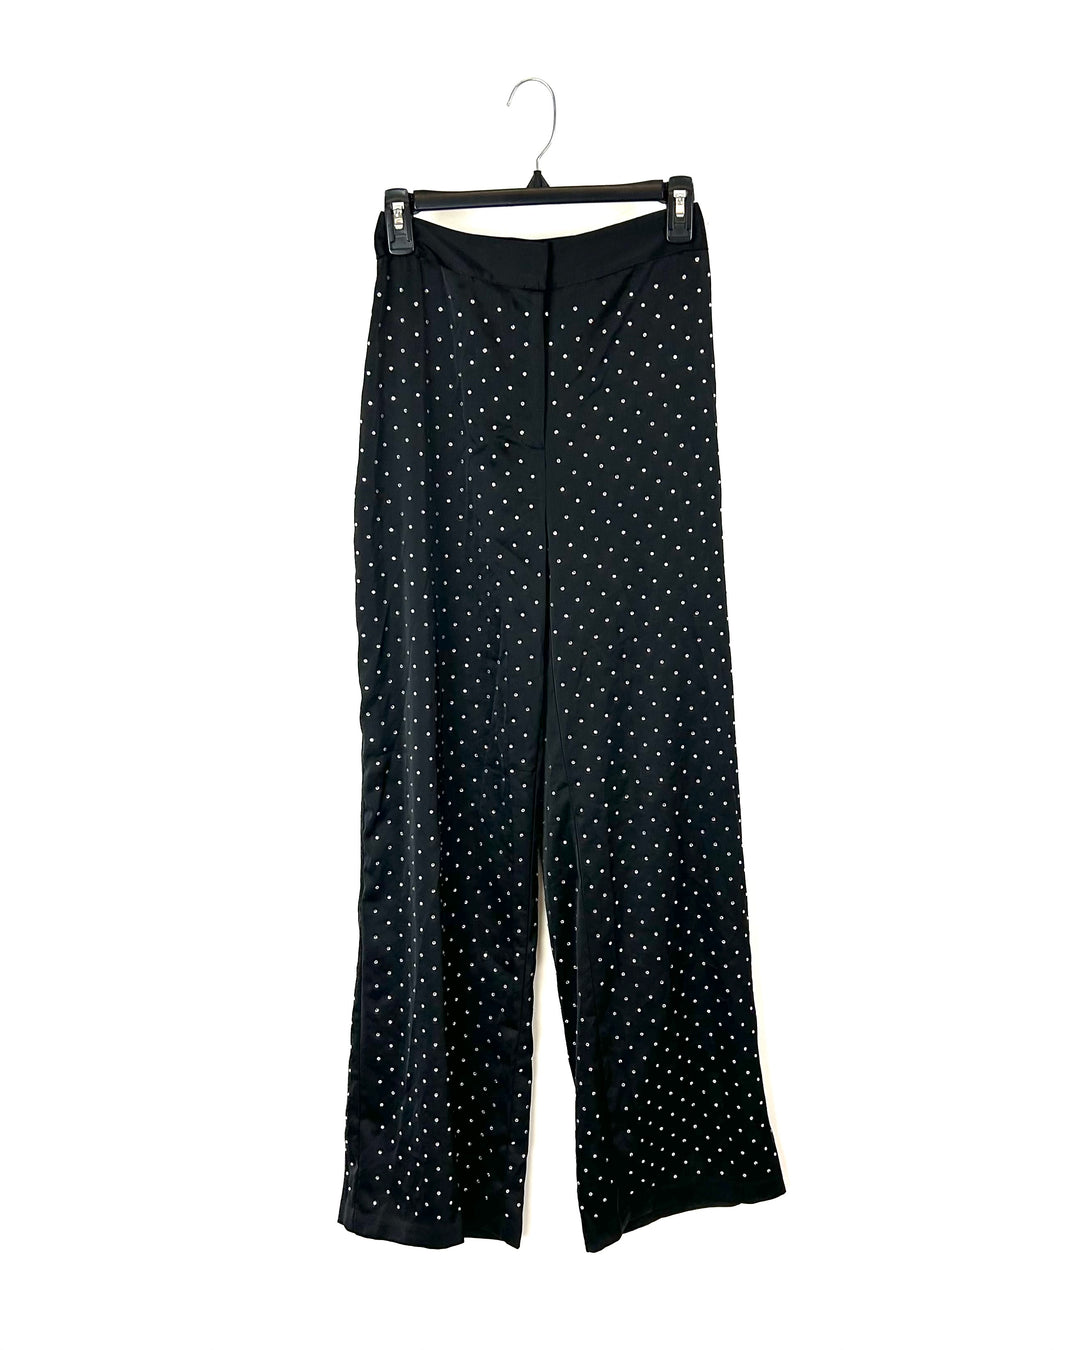 Dressy Black Rhinestone Pants - Size 0 and 2